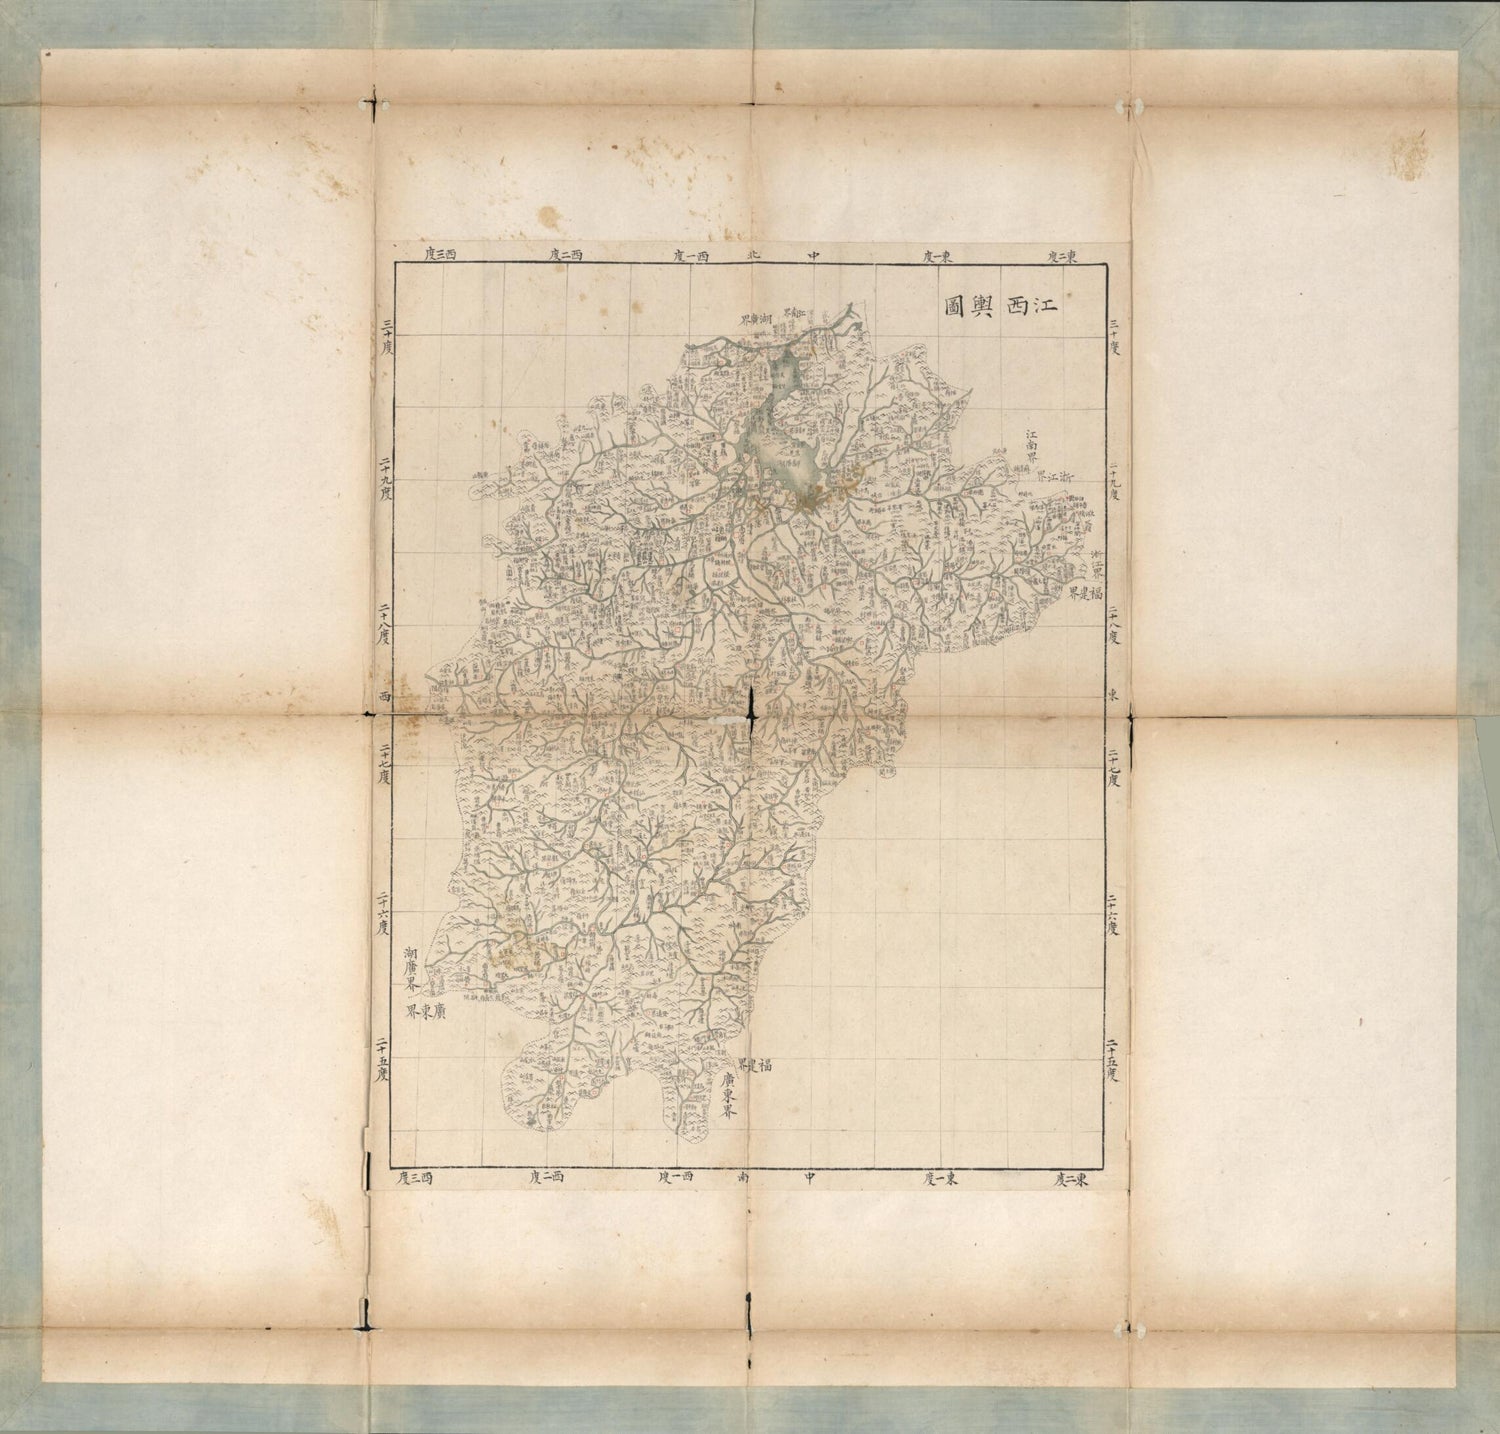 This old map of Huang Yu Quan Lan Fen Sheng Tu. (皇與全覽分省圖, Zhongguo Ge Sheng Di Tu, the Kangxi Provincial Atlas of China) from 1721 was created by William Woodville Rockhill in 1721